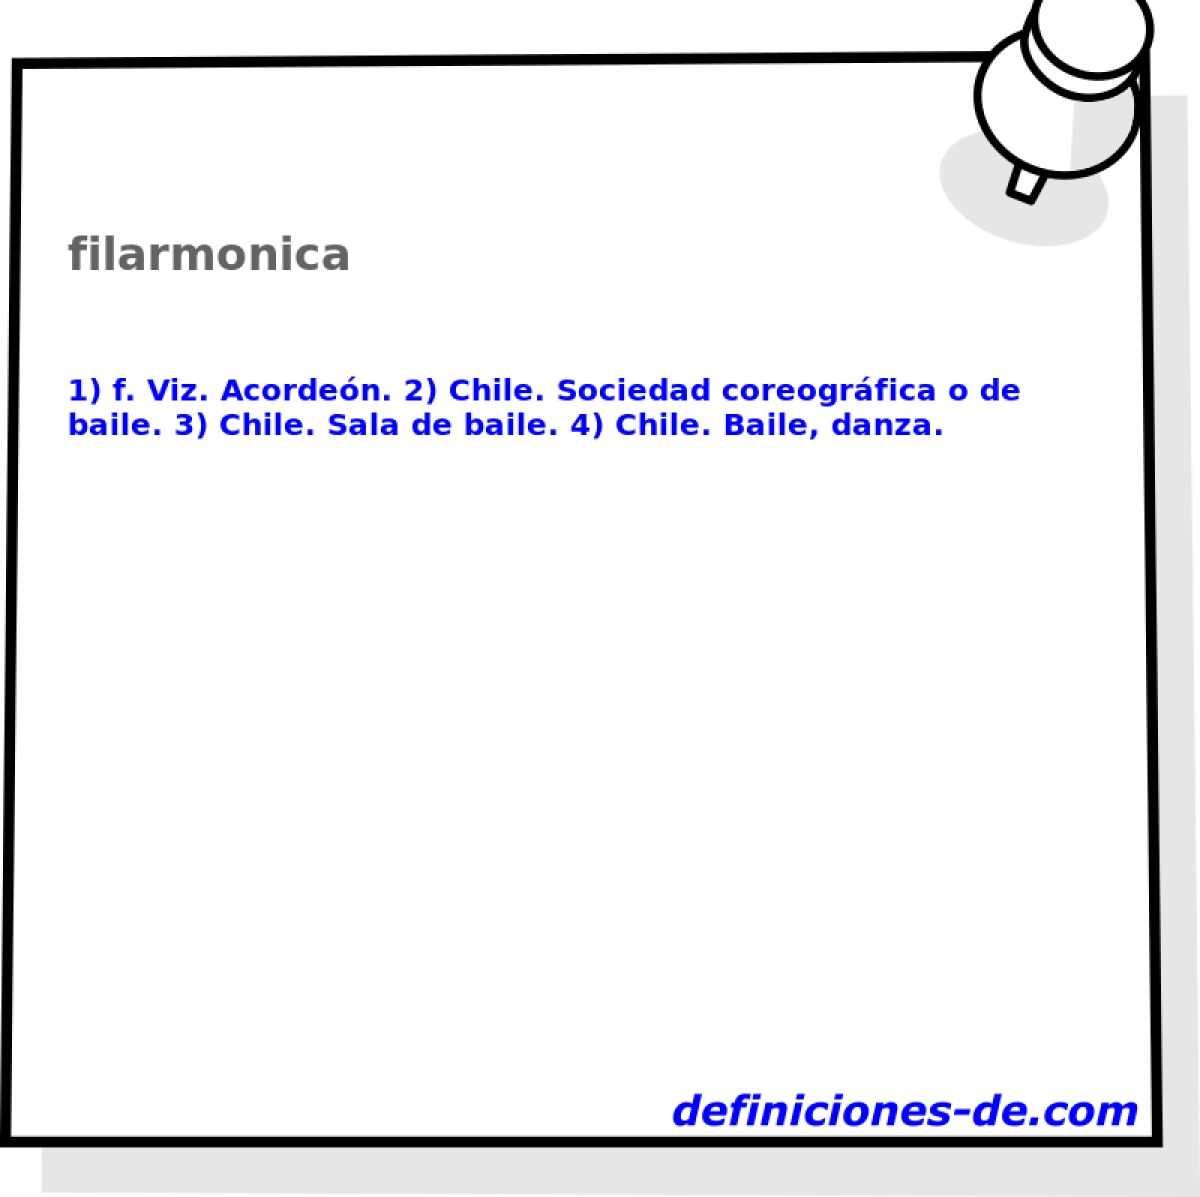 filarmonica 